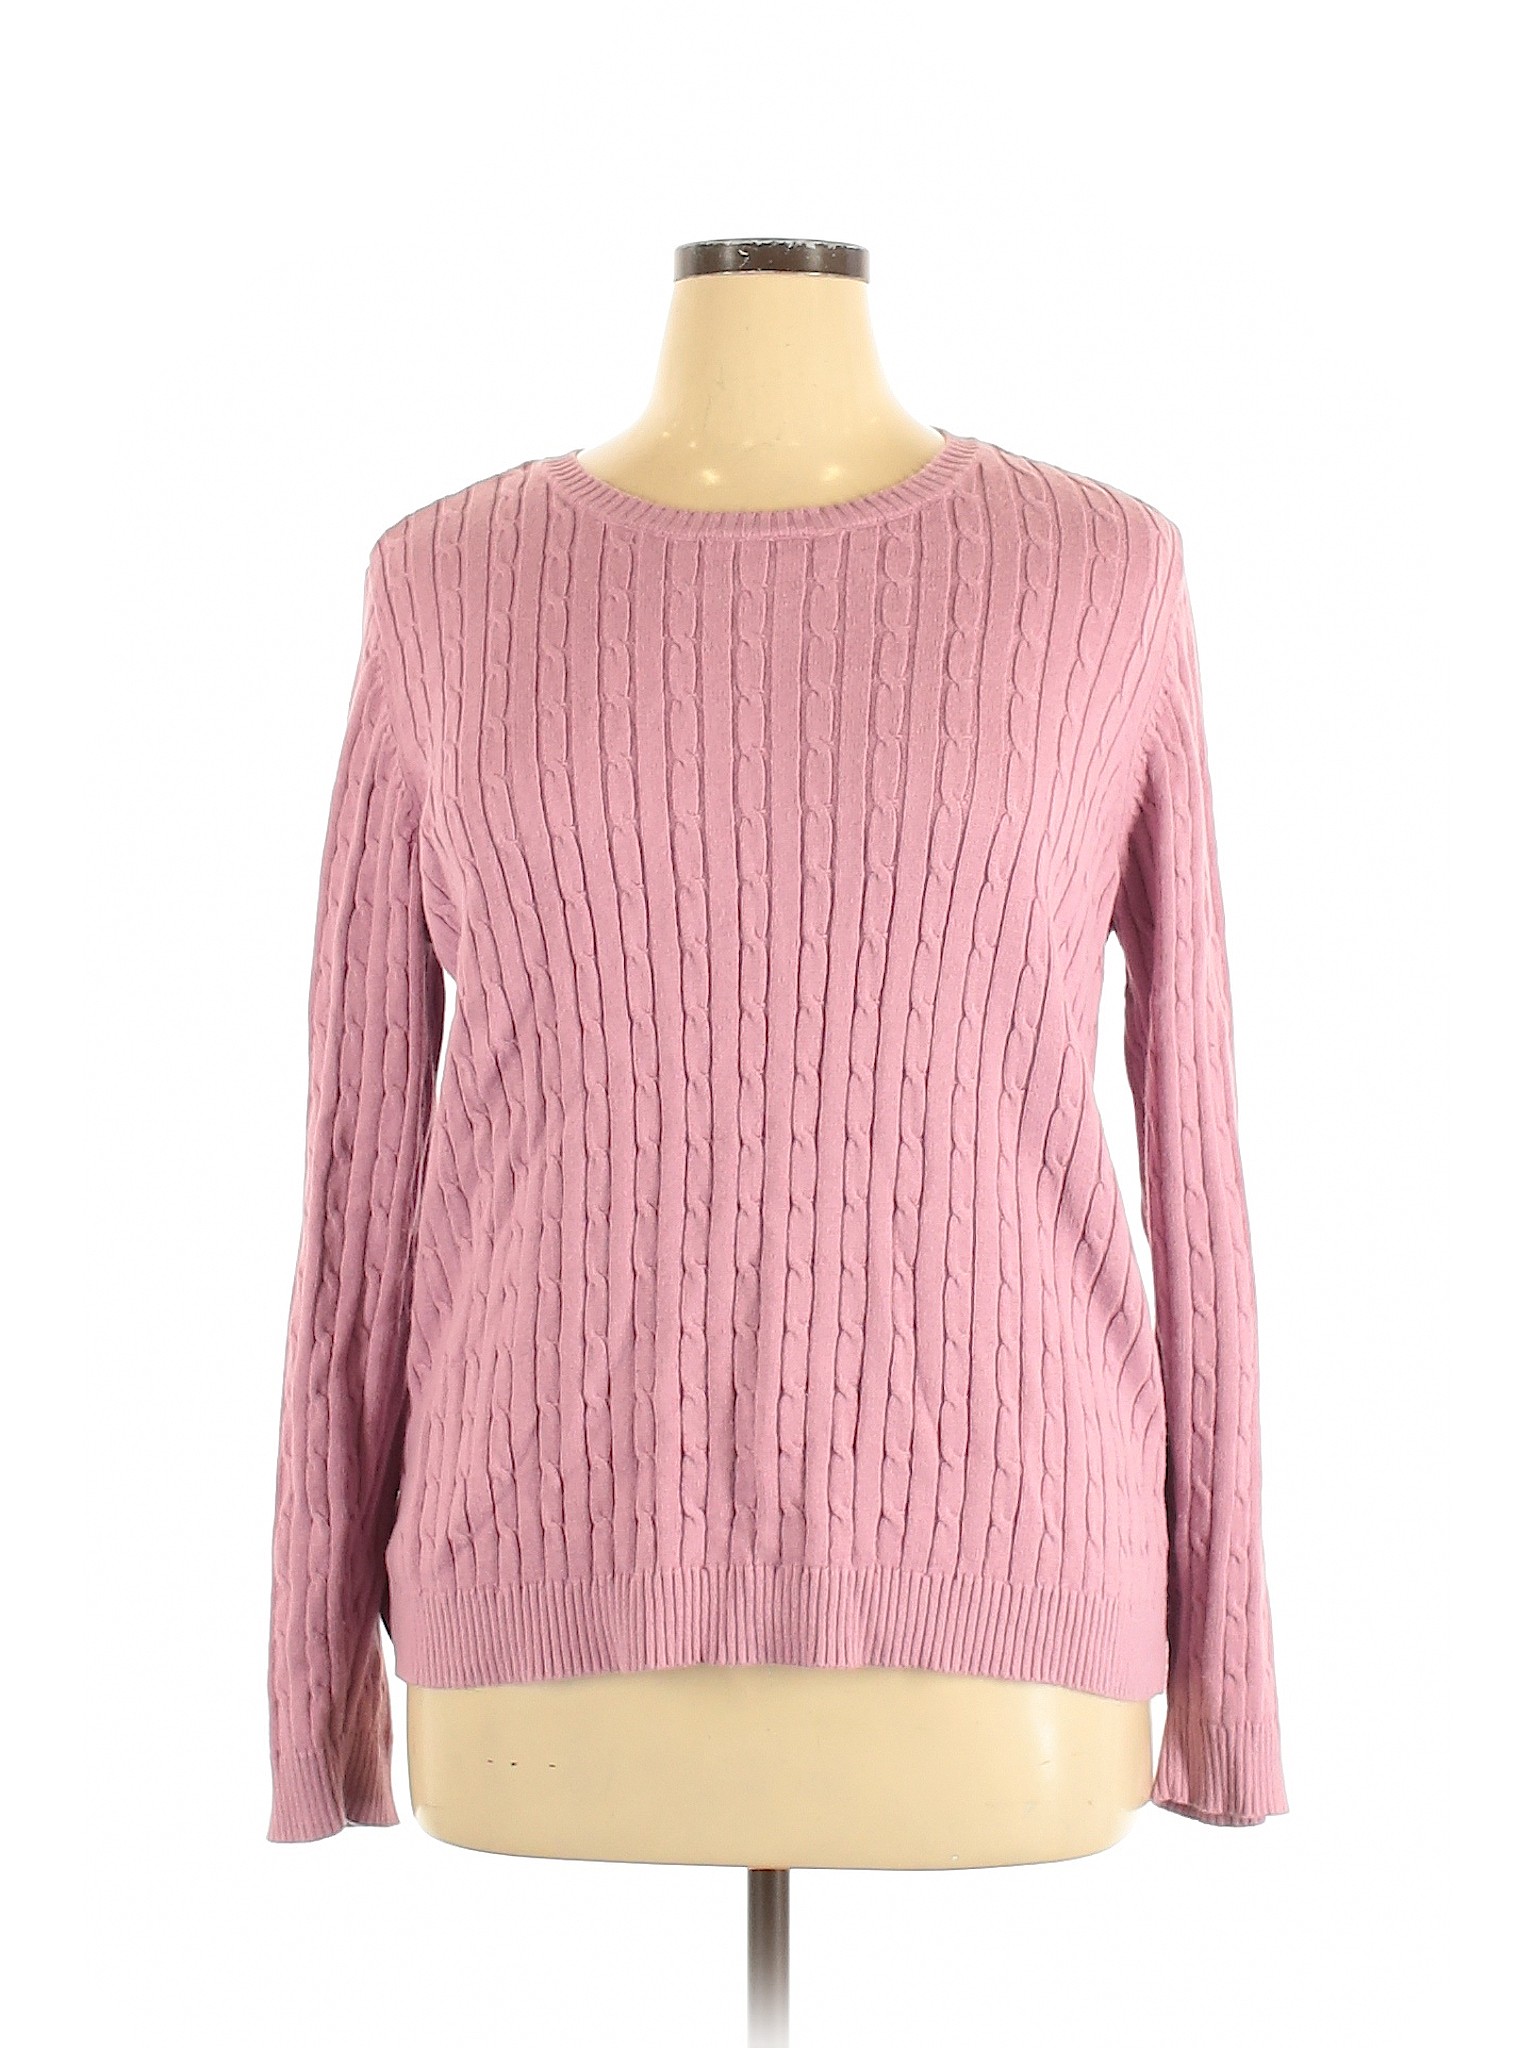 Croft & Barrow Women Pink Pullover Sweater XL | eBay